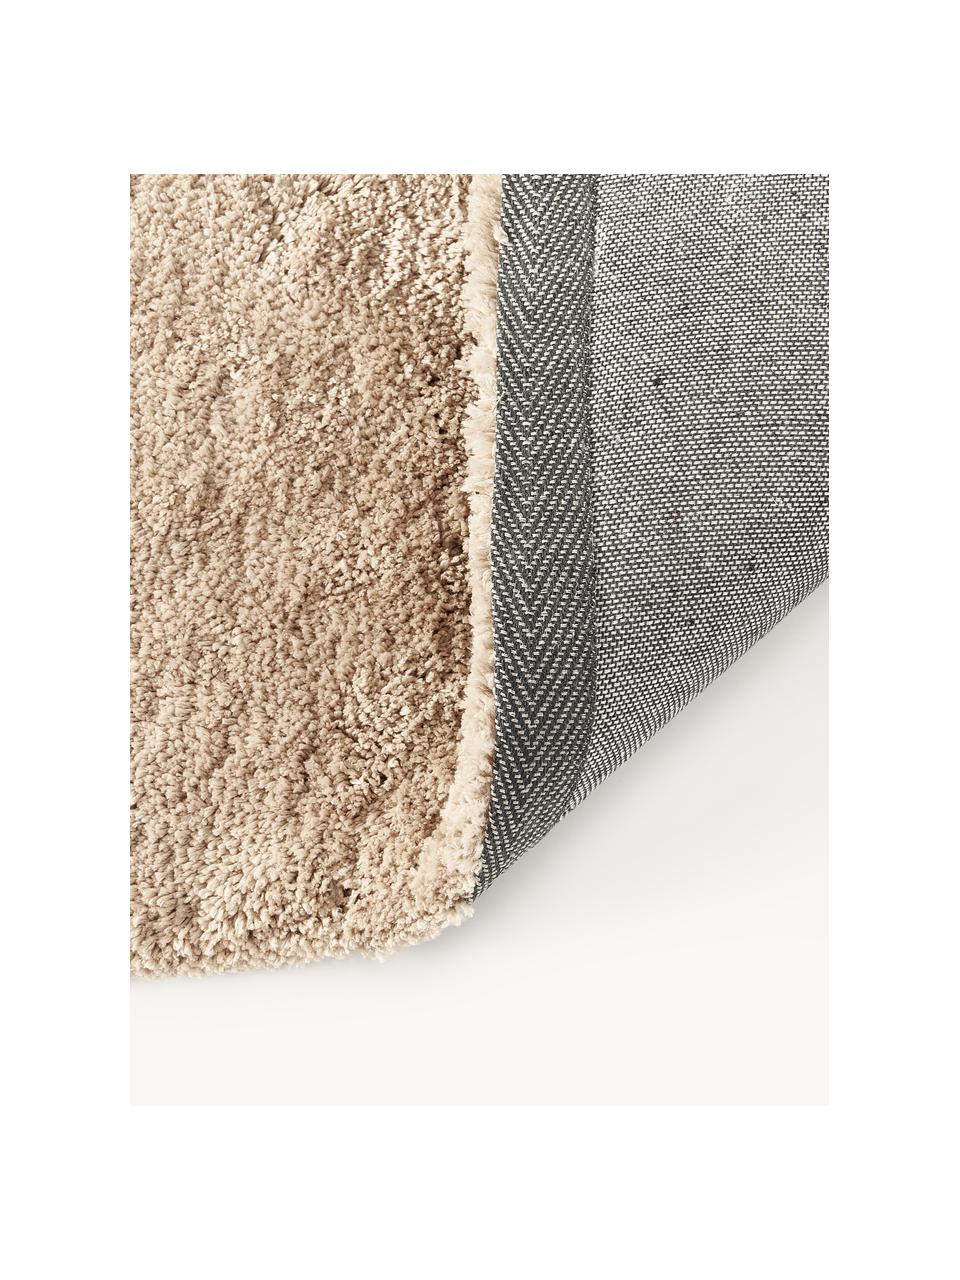 Pluizig hoogpolig vloerkleed Leighton, Microvezels (100% polyester, GRS-gecertificeerd), Nougat, B 80 x L 150 cm (maat XS)